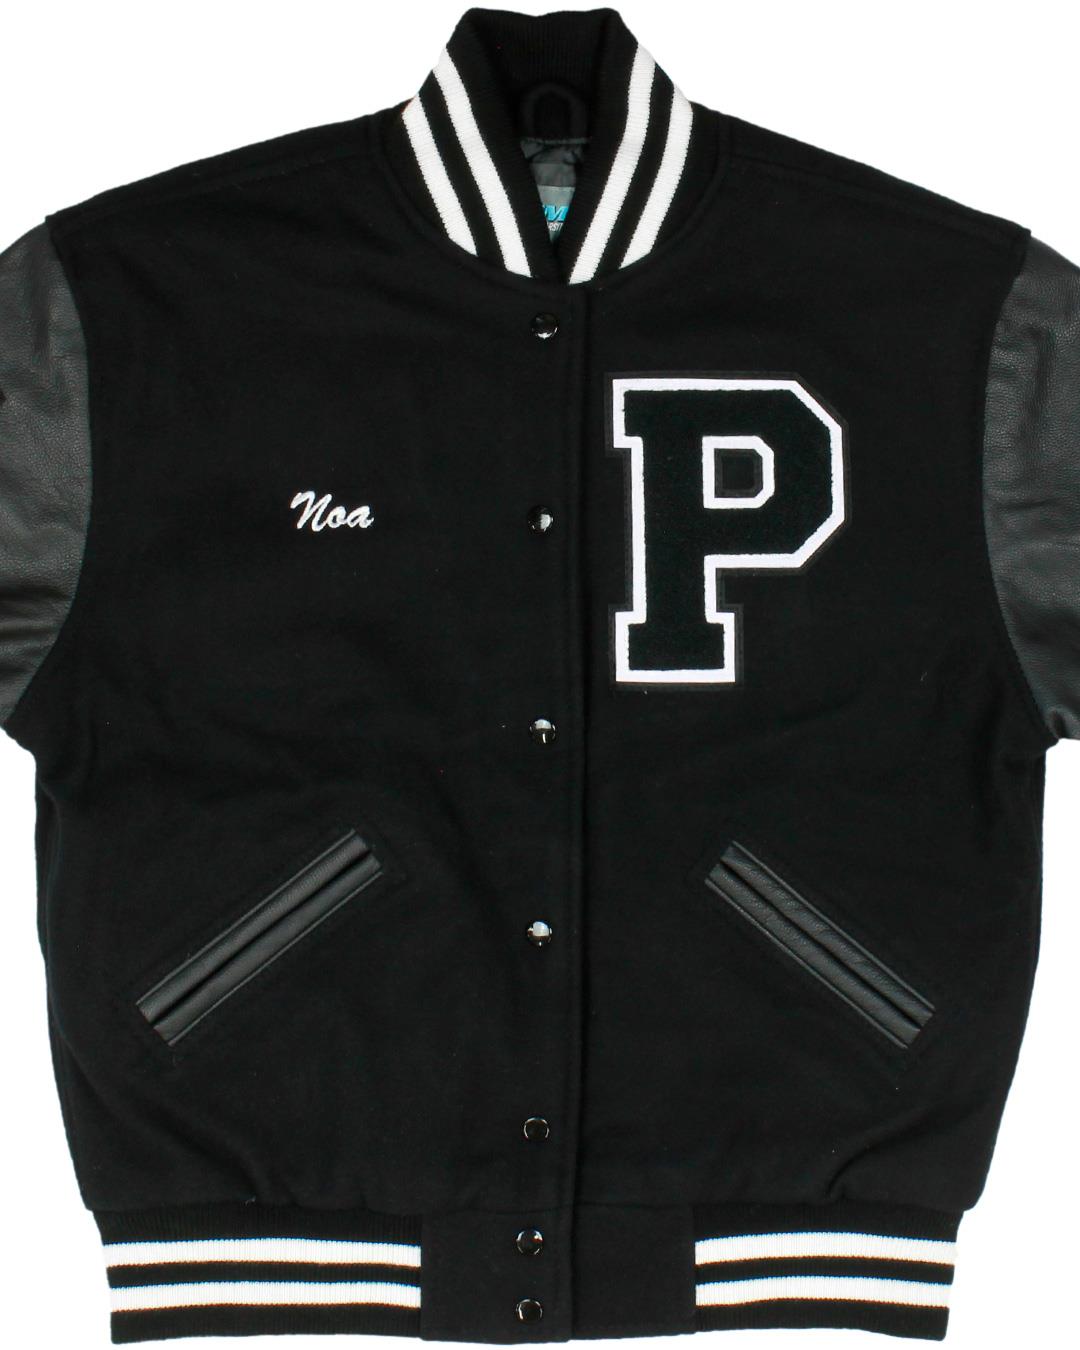 Permian High School Letterman Jacket, Odessa, TX - Front